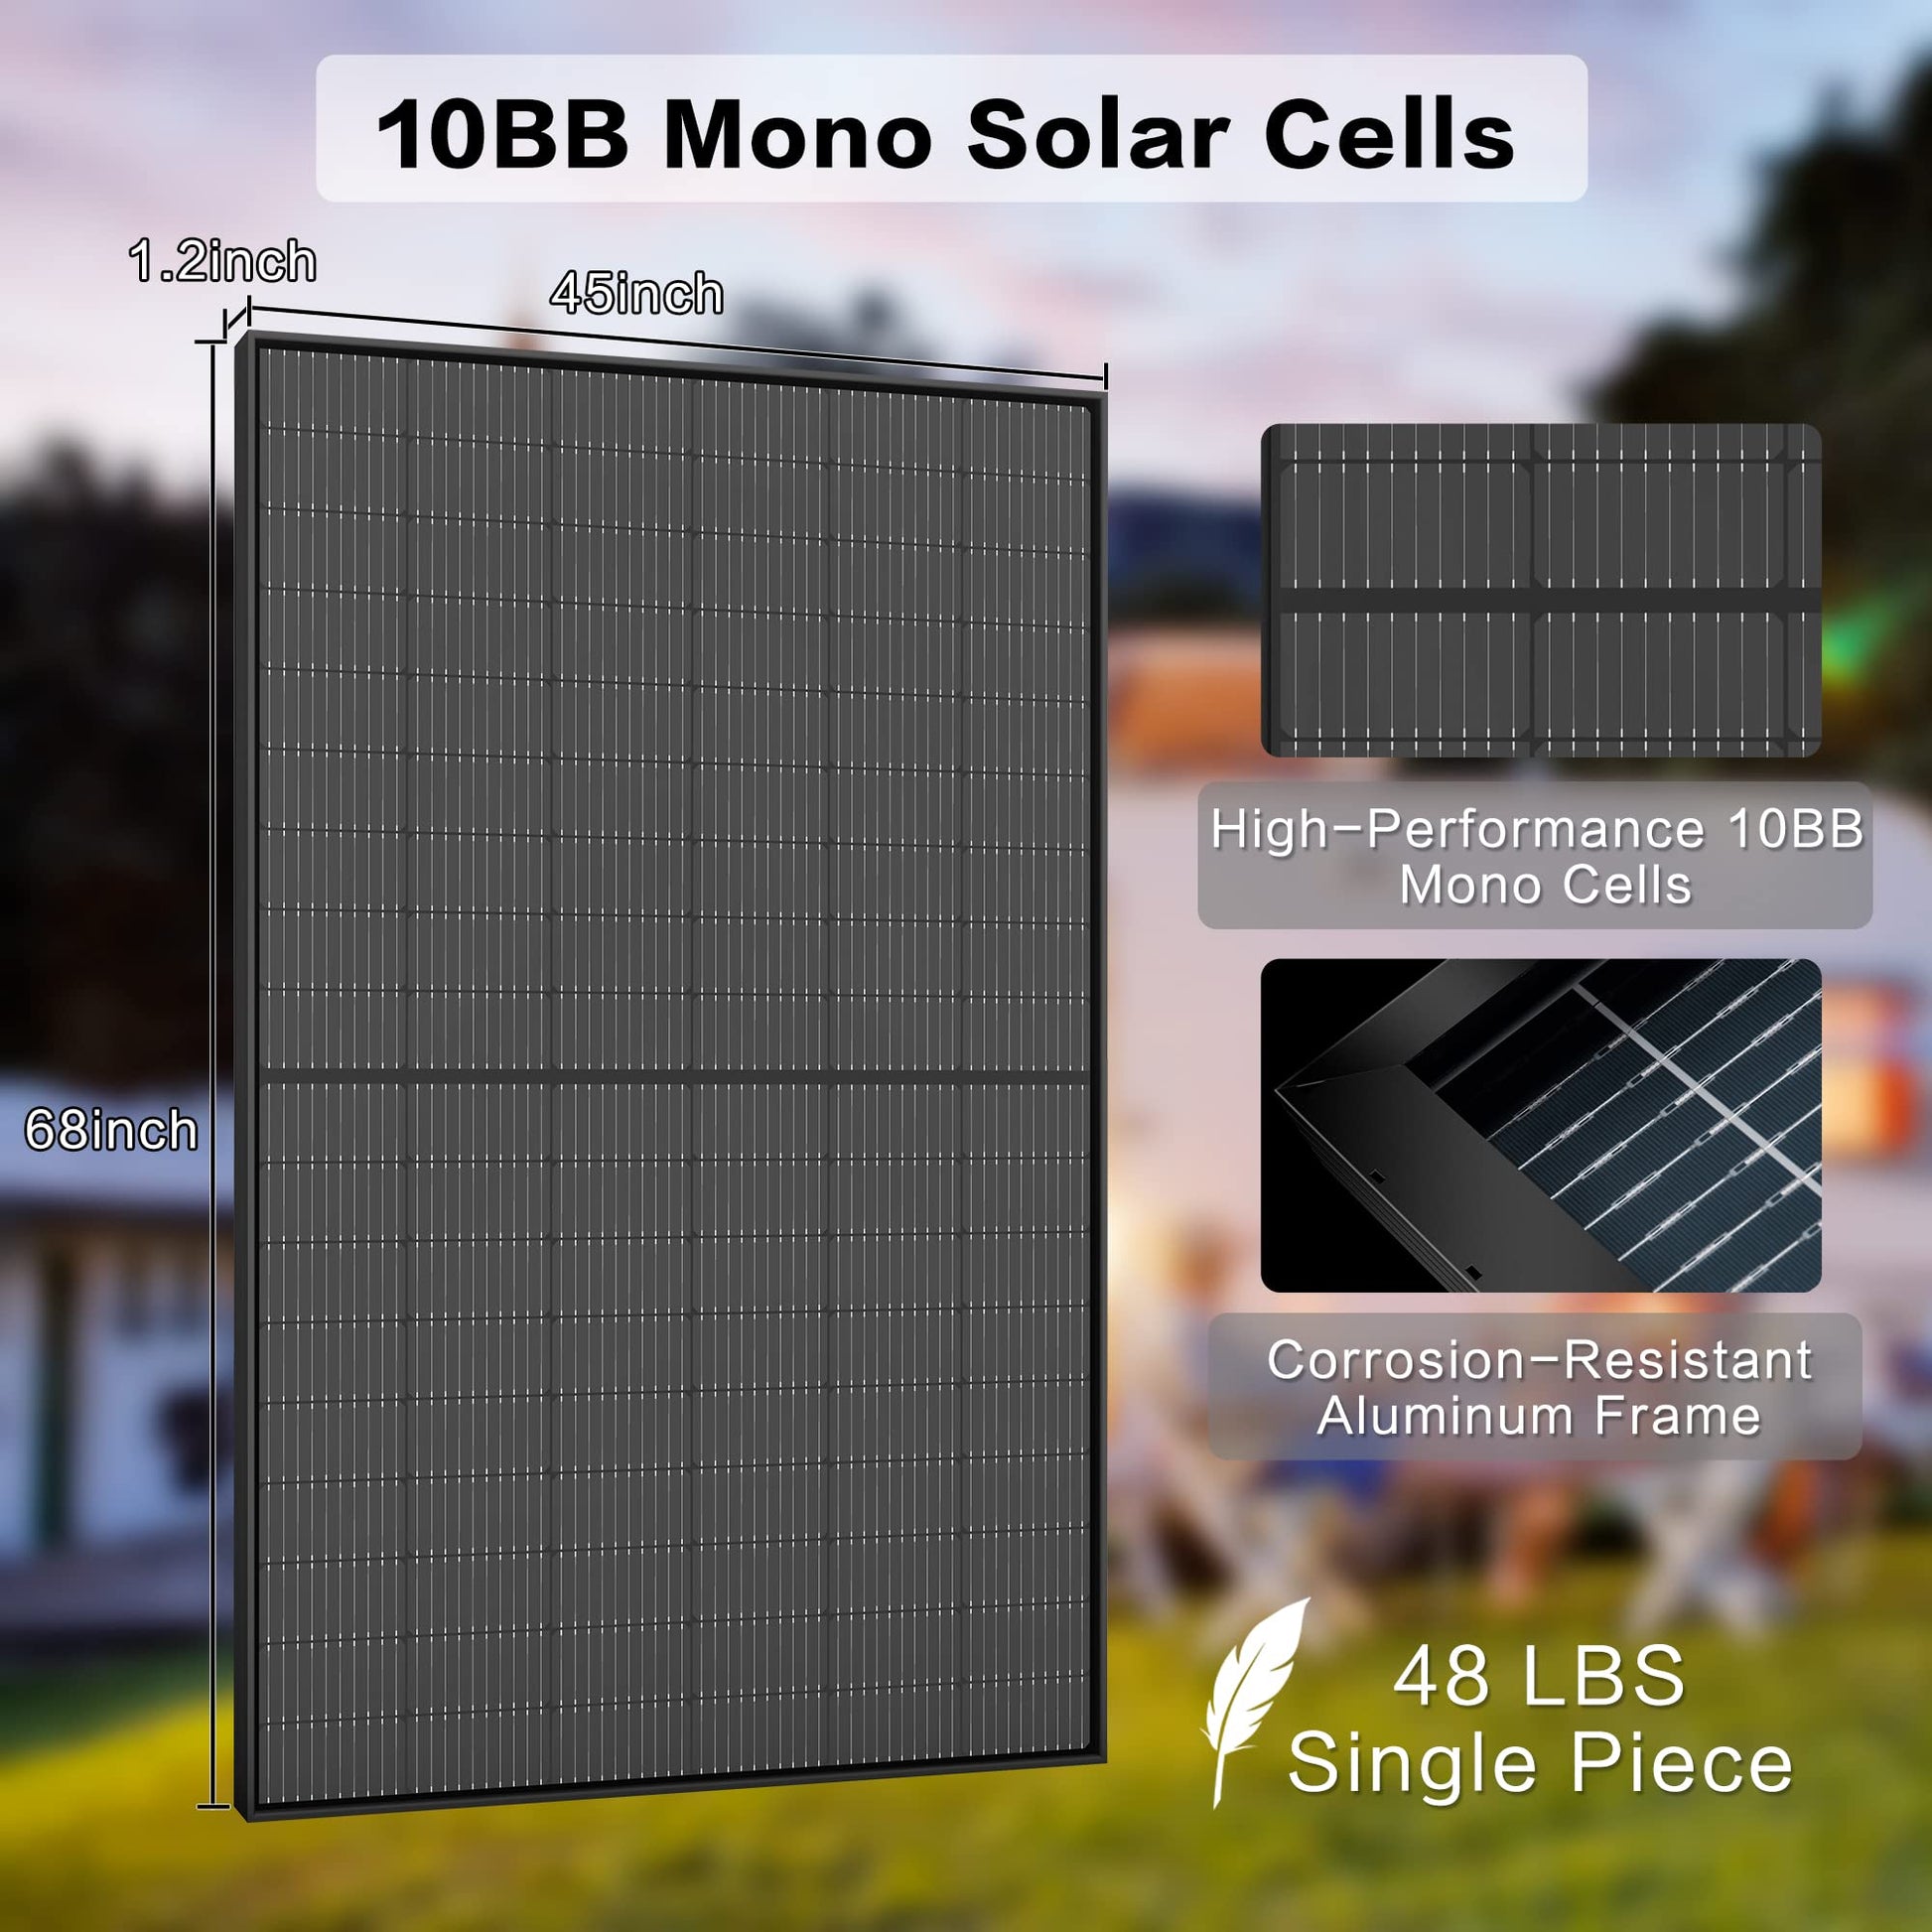 10bb mono solar cells